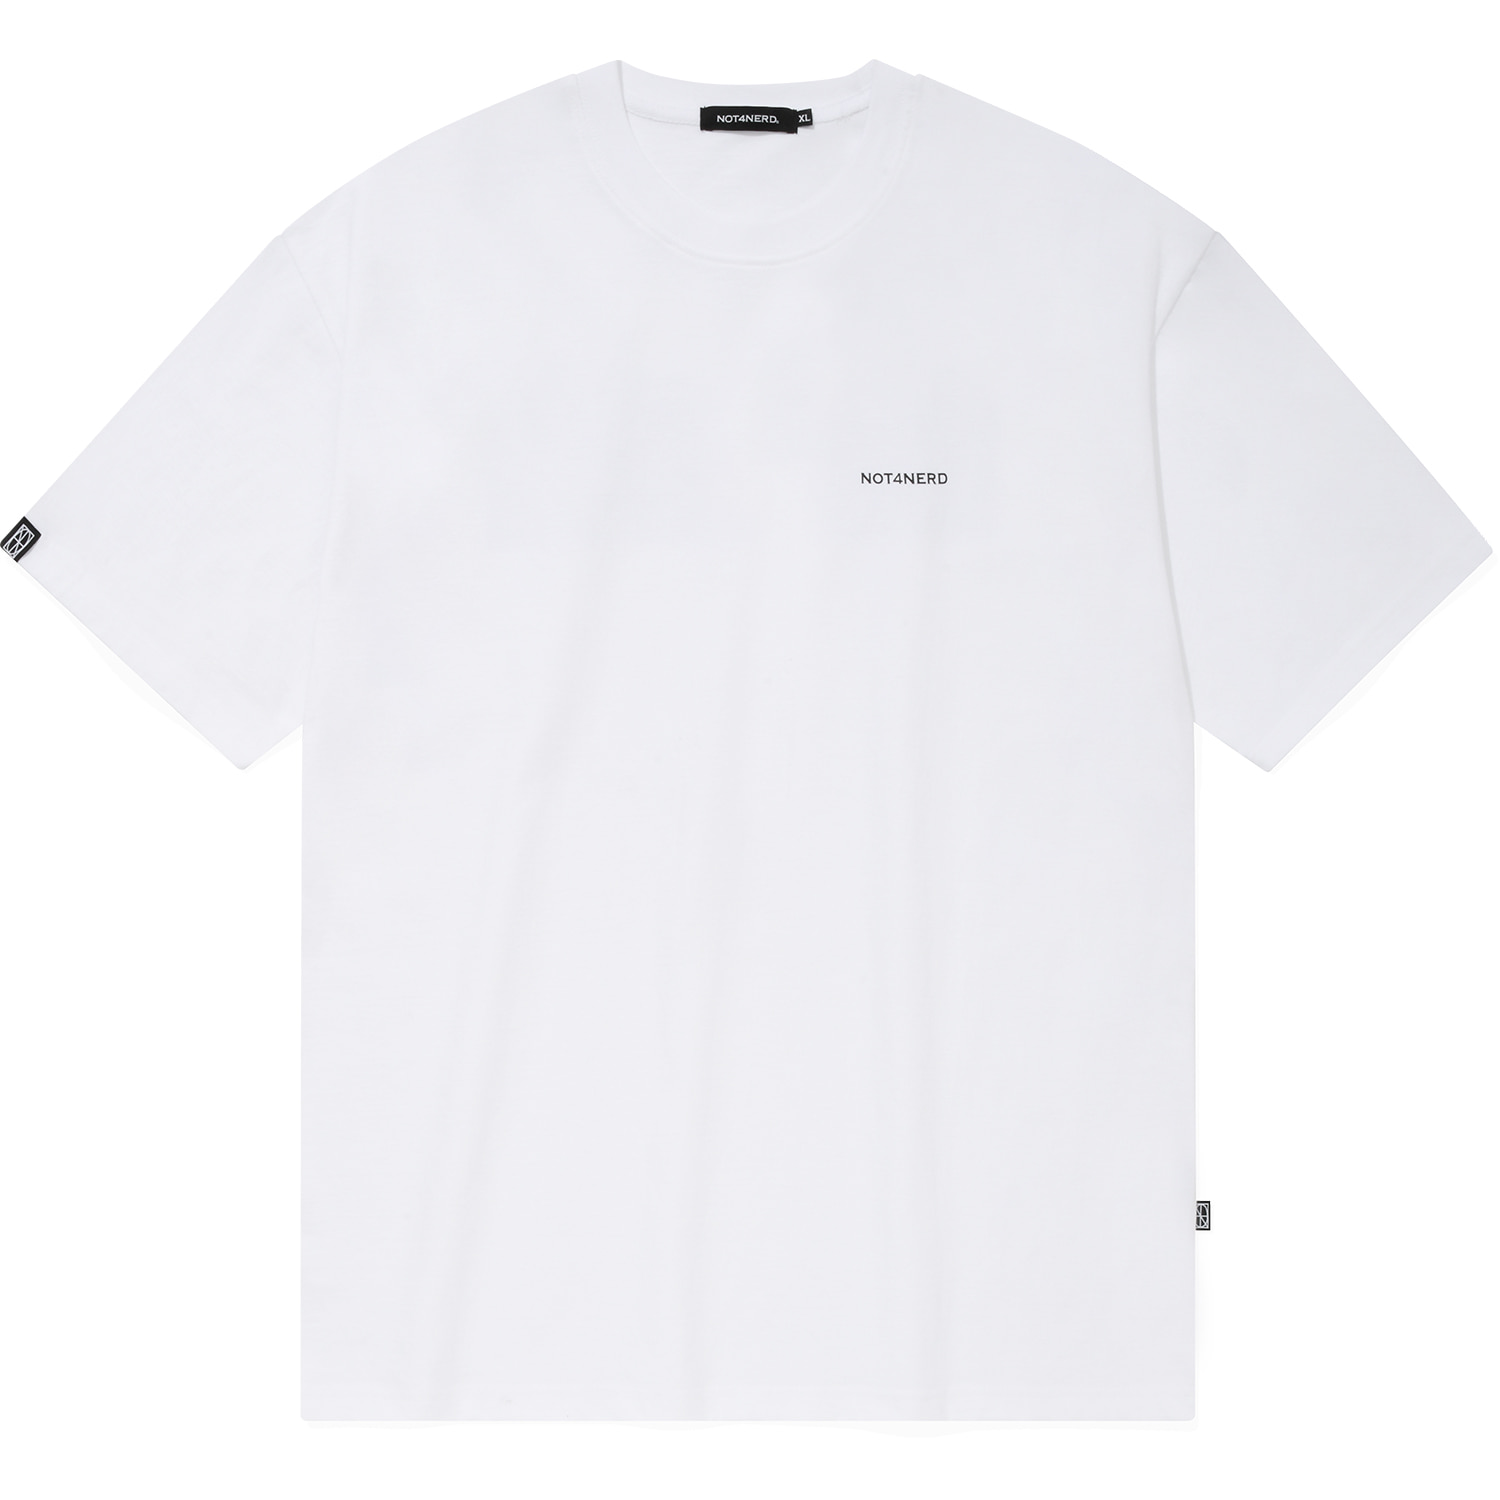 Tidal Wave T-Shirts White,NOT4NERD